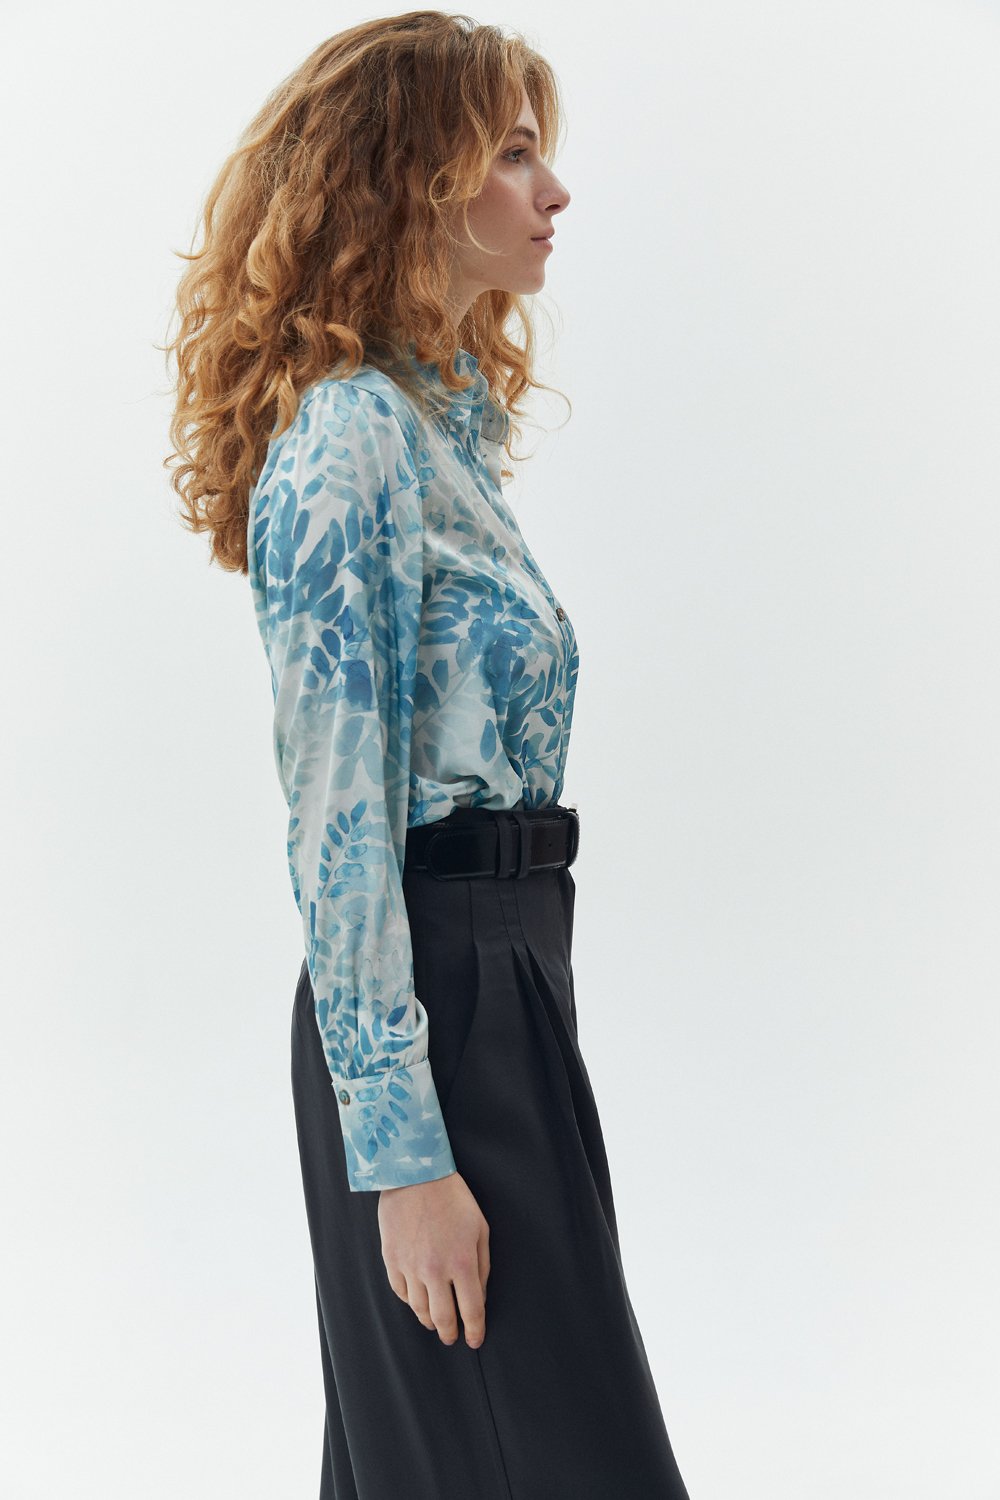 Elegant loose-fitting turquoise blouse